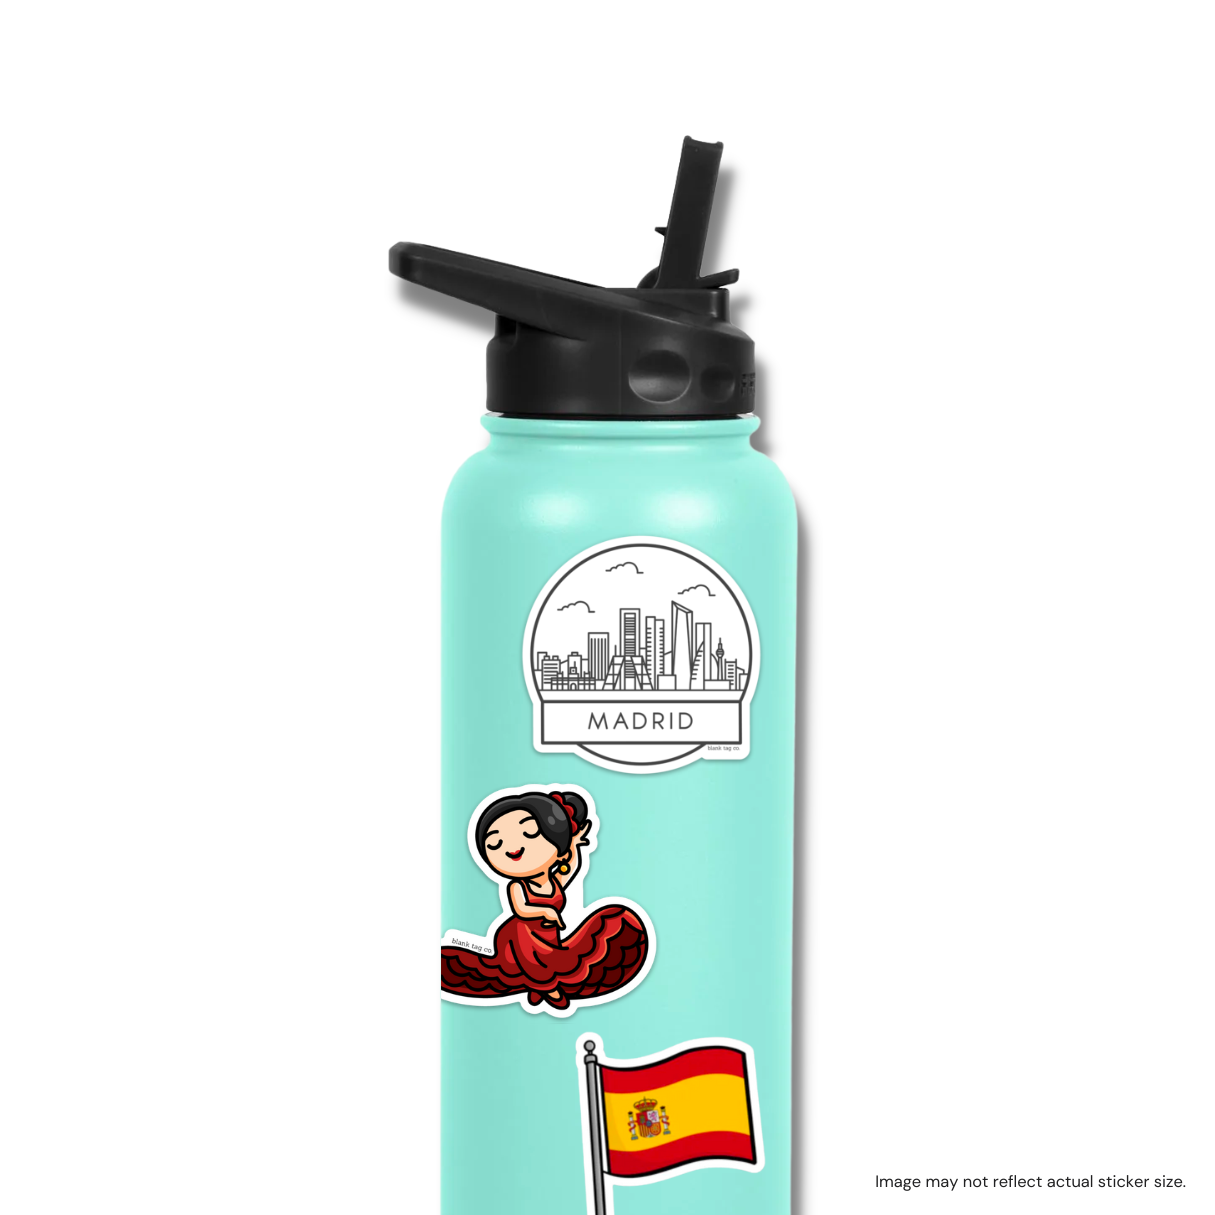 The Spain Flag Sticker